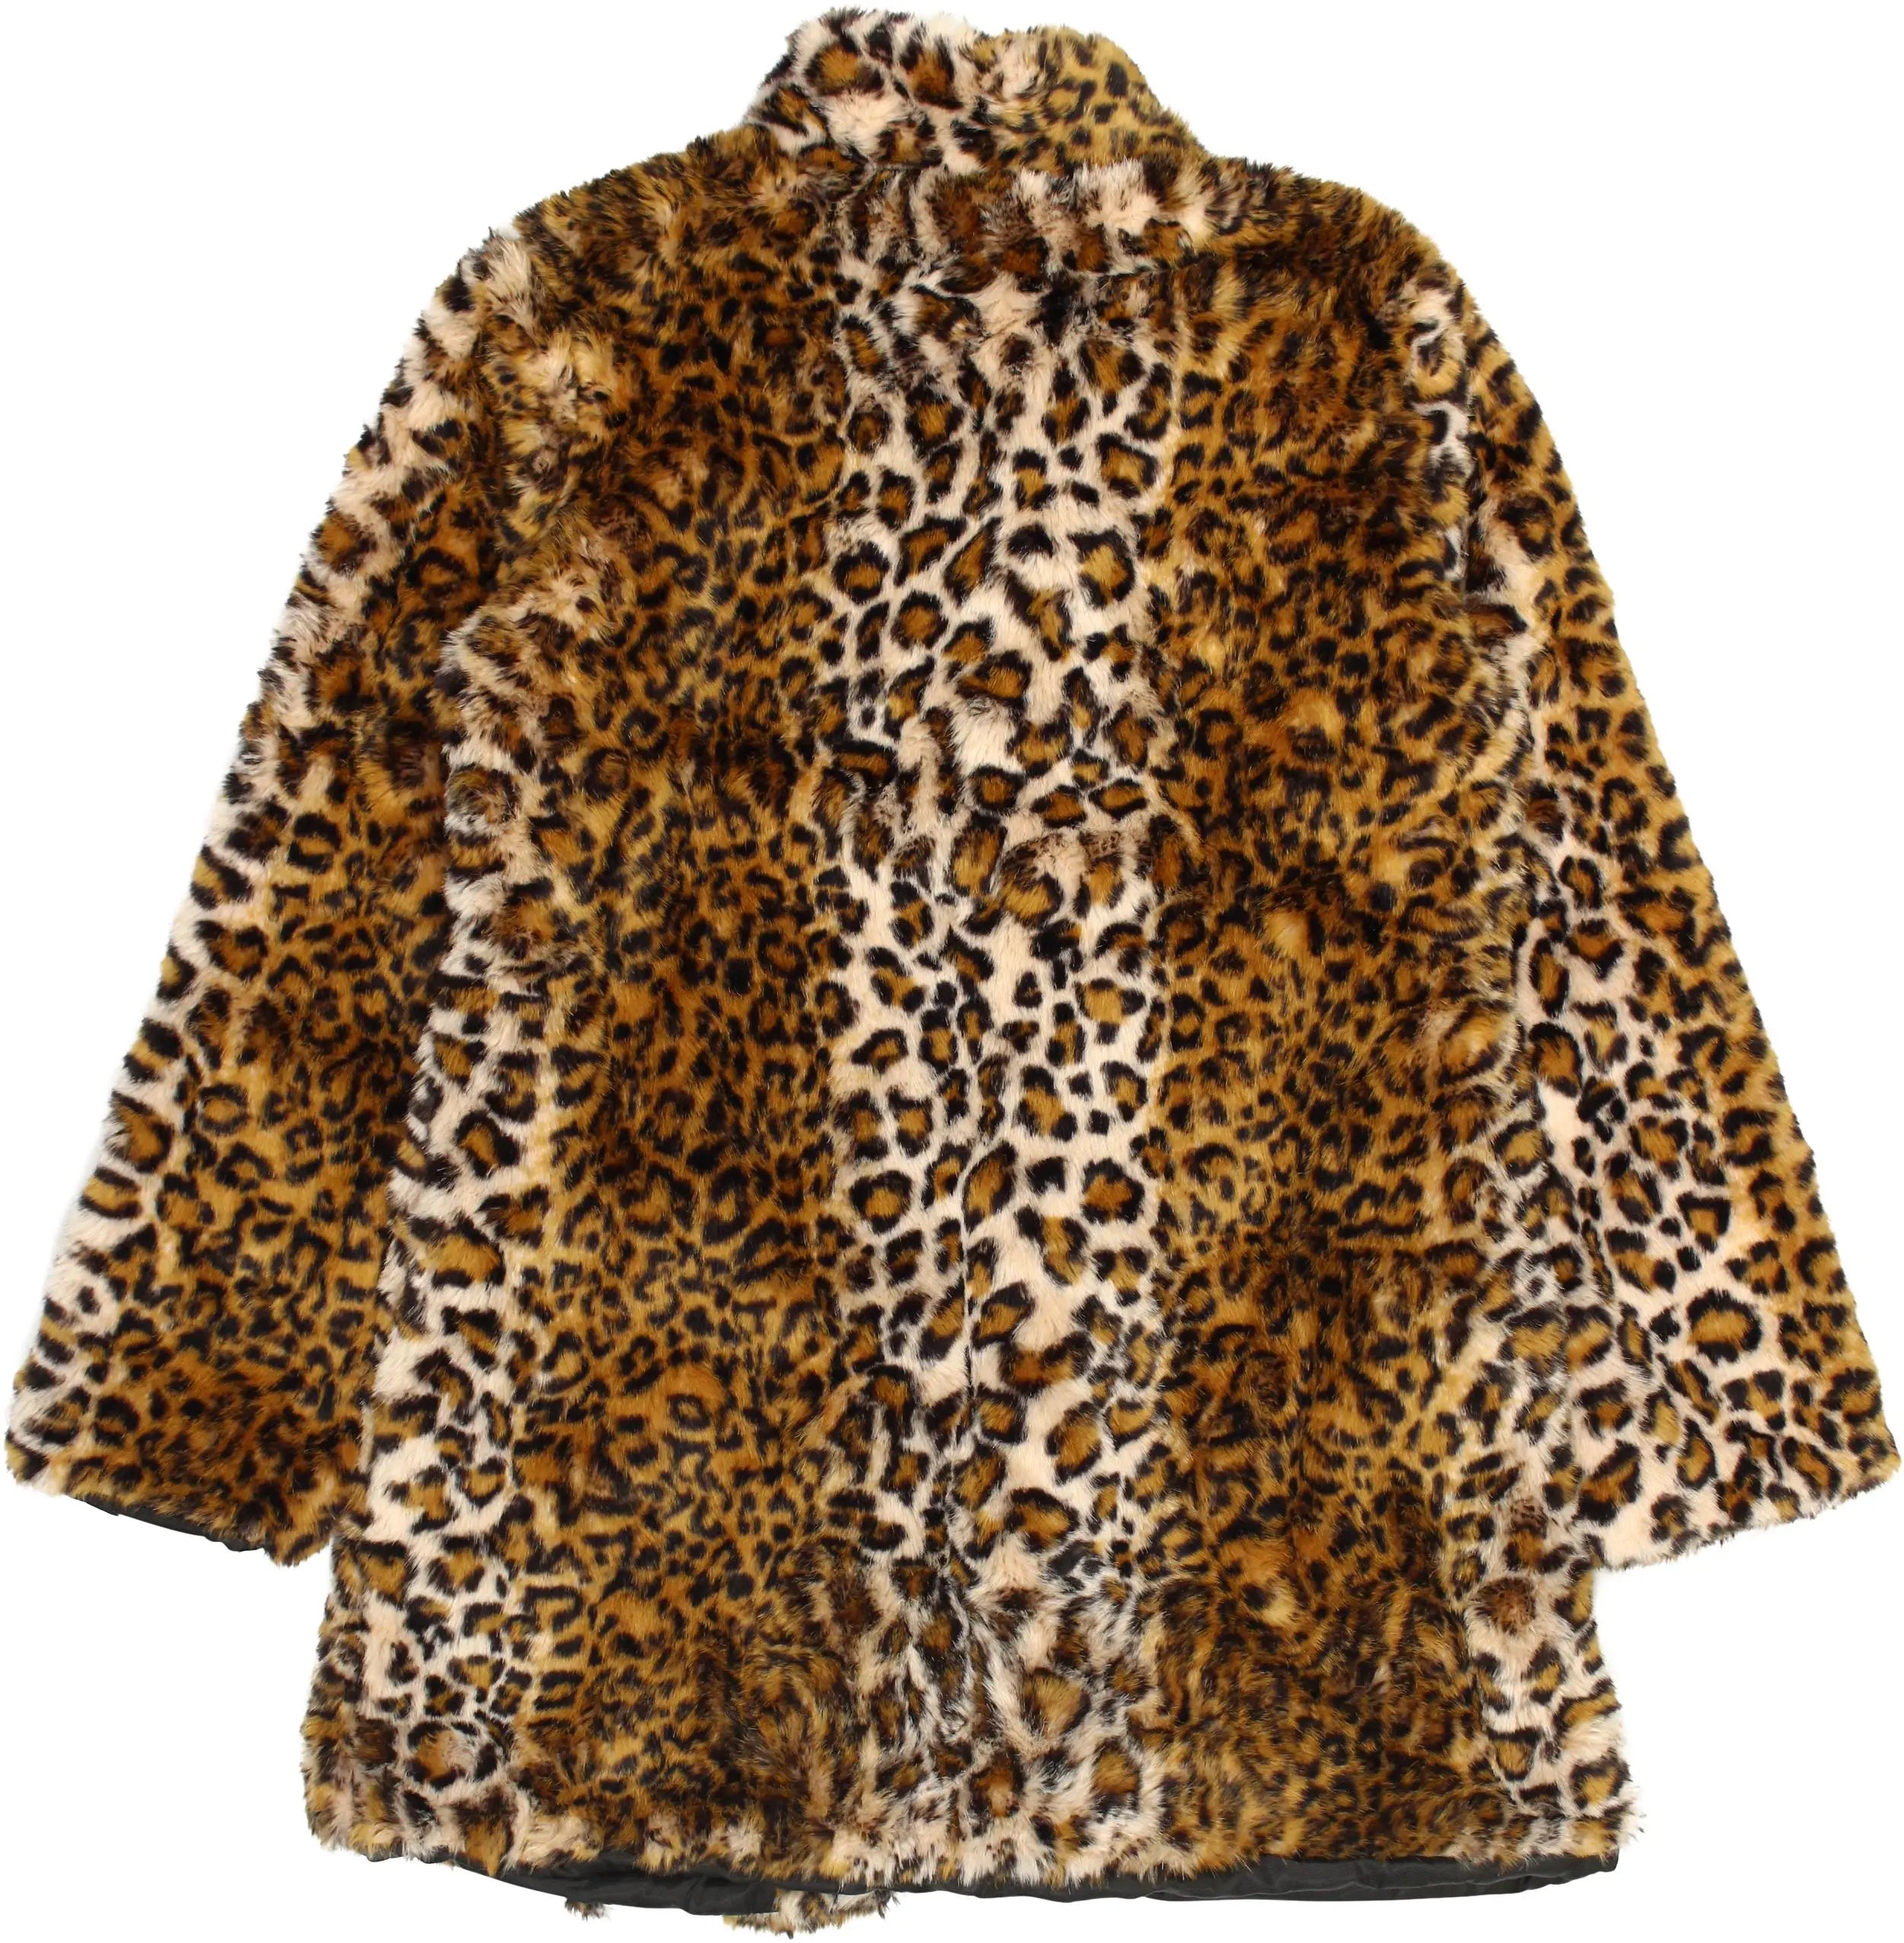 Lanshifei - Faux Fur Leopard Coat- ThriftTale.com - Vintage and second handclothing